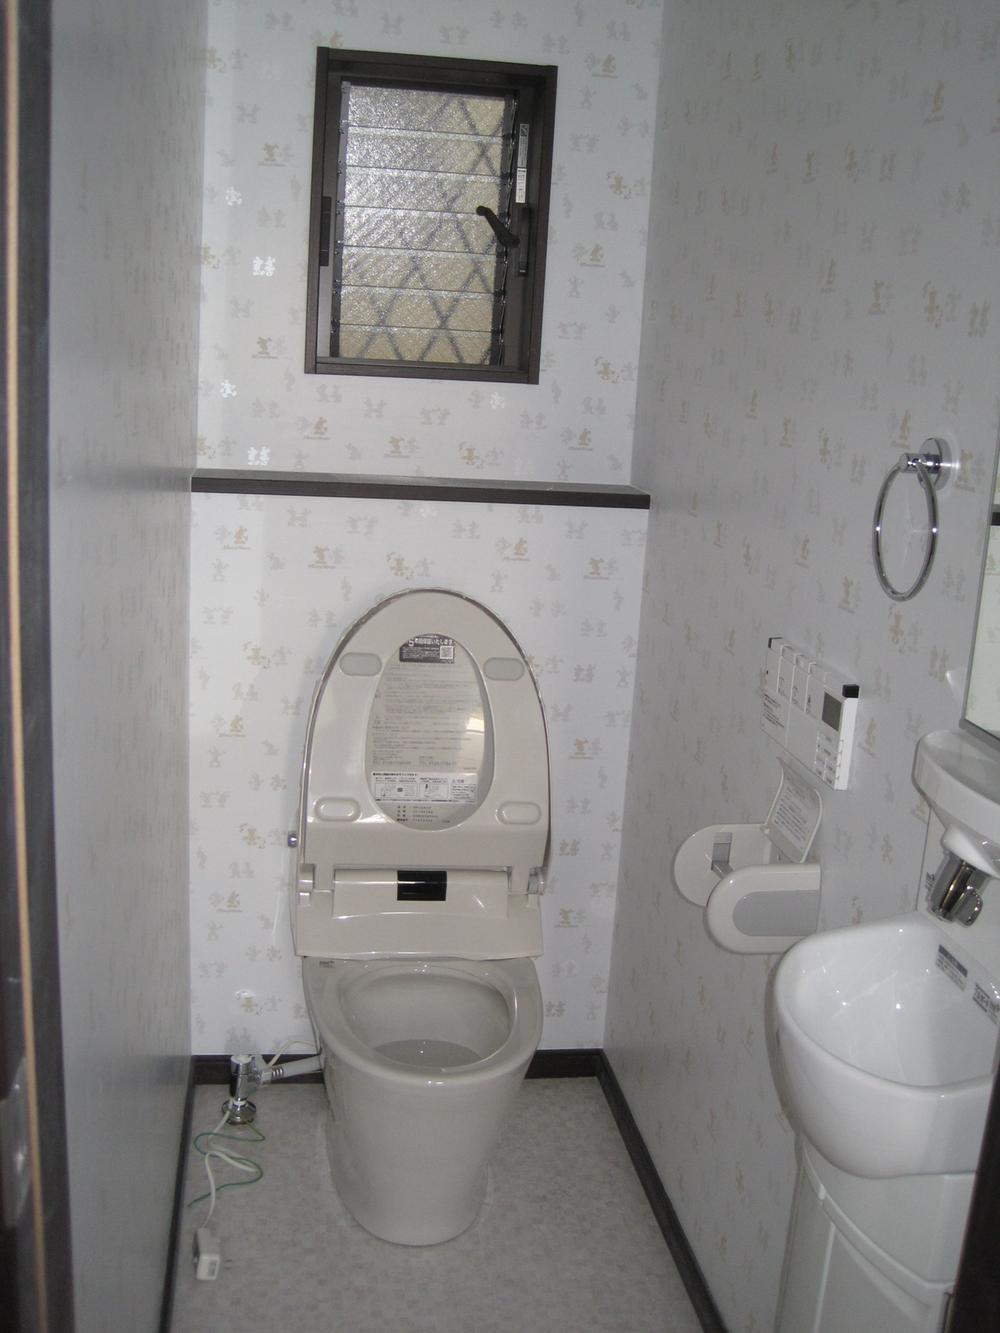 Building plan example (introspection photo). Shower toilet